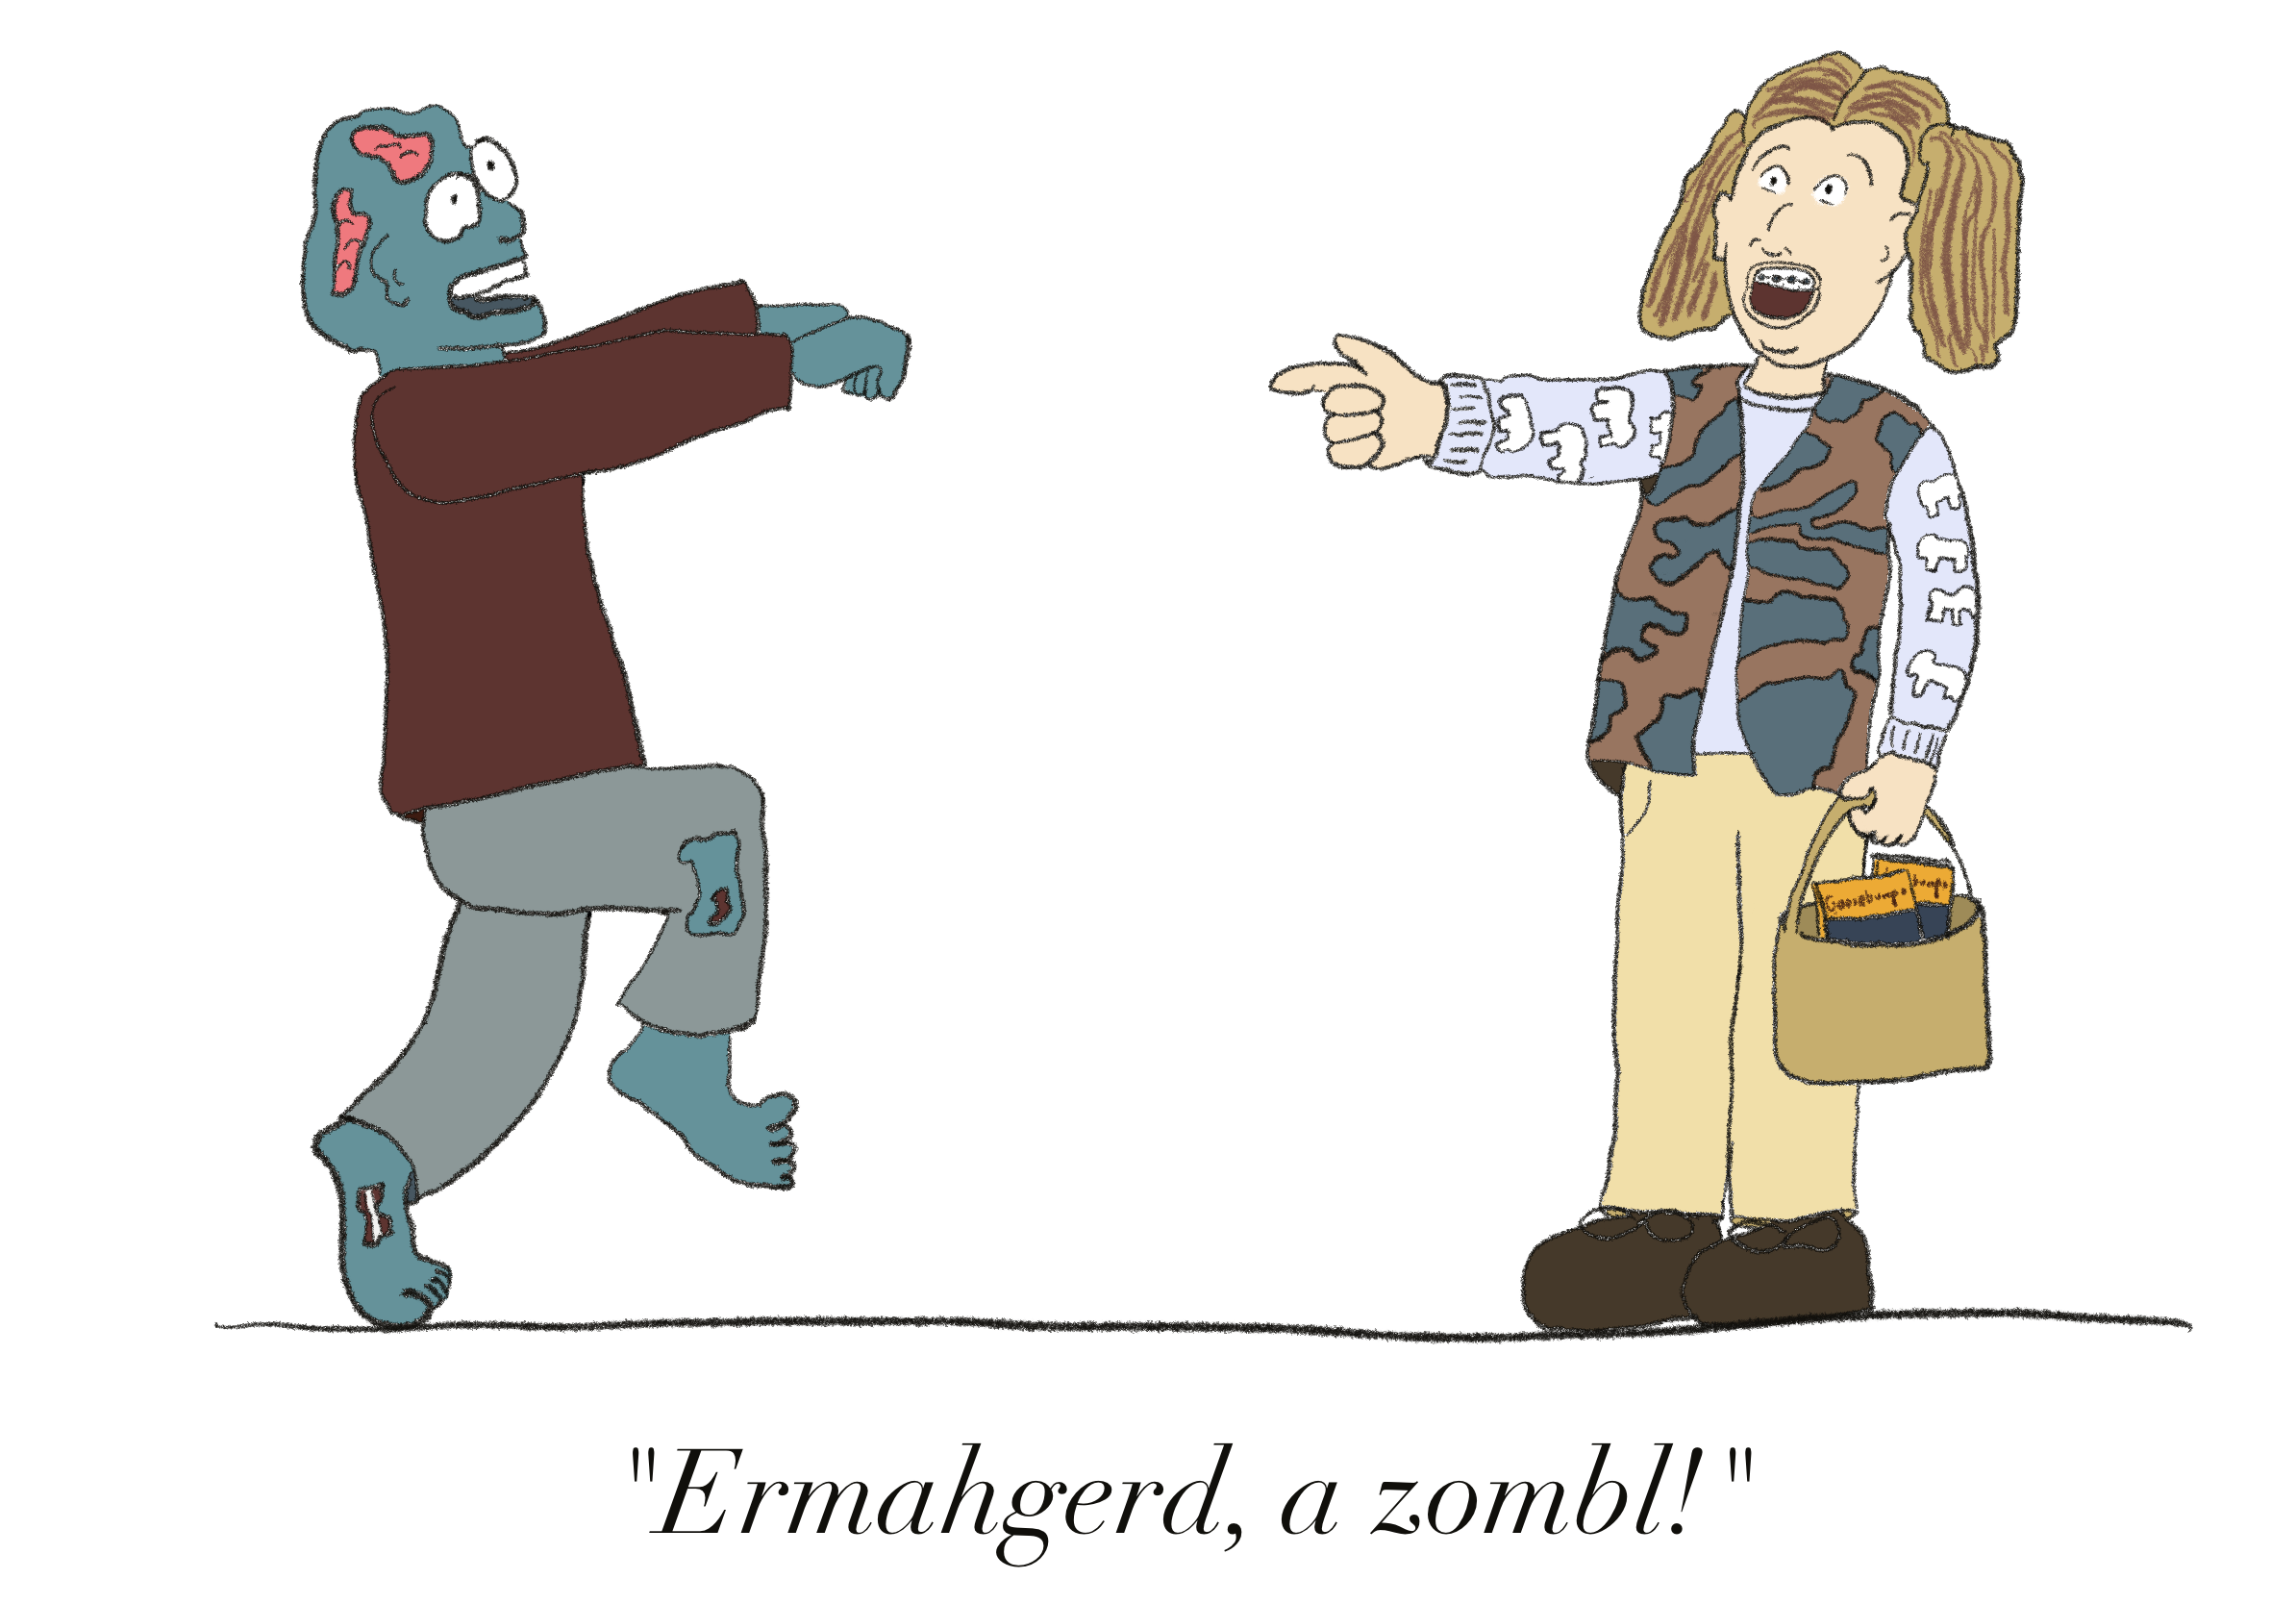 A zombie shambles towards a girl with braces and a pony tail (the 'ermahgerd') girl. Caption: "Ermahgerd, a zombl!"